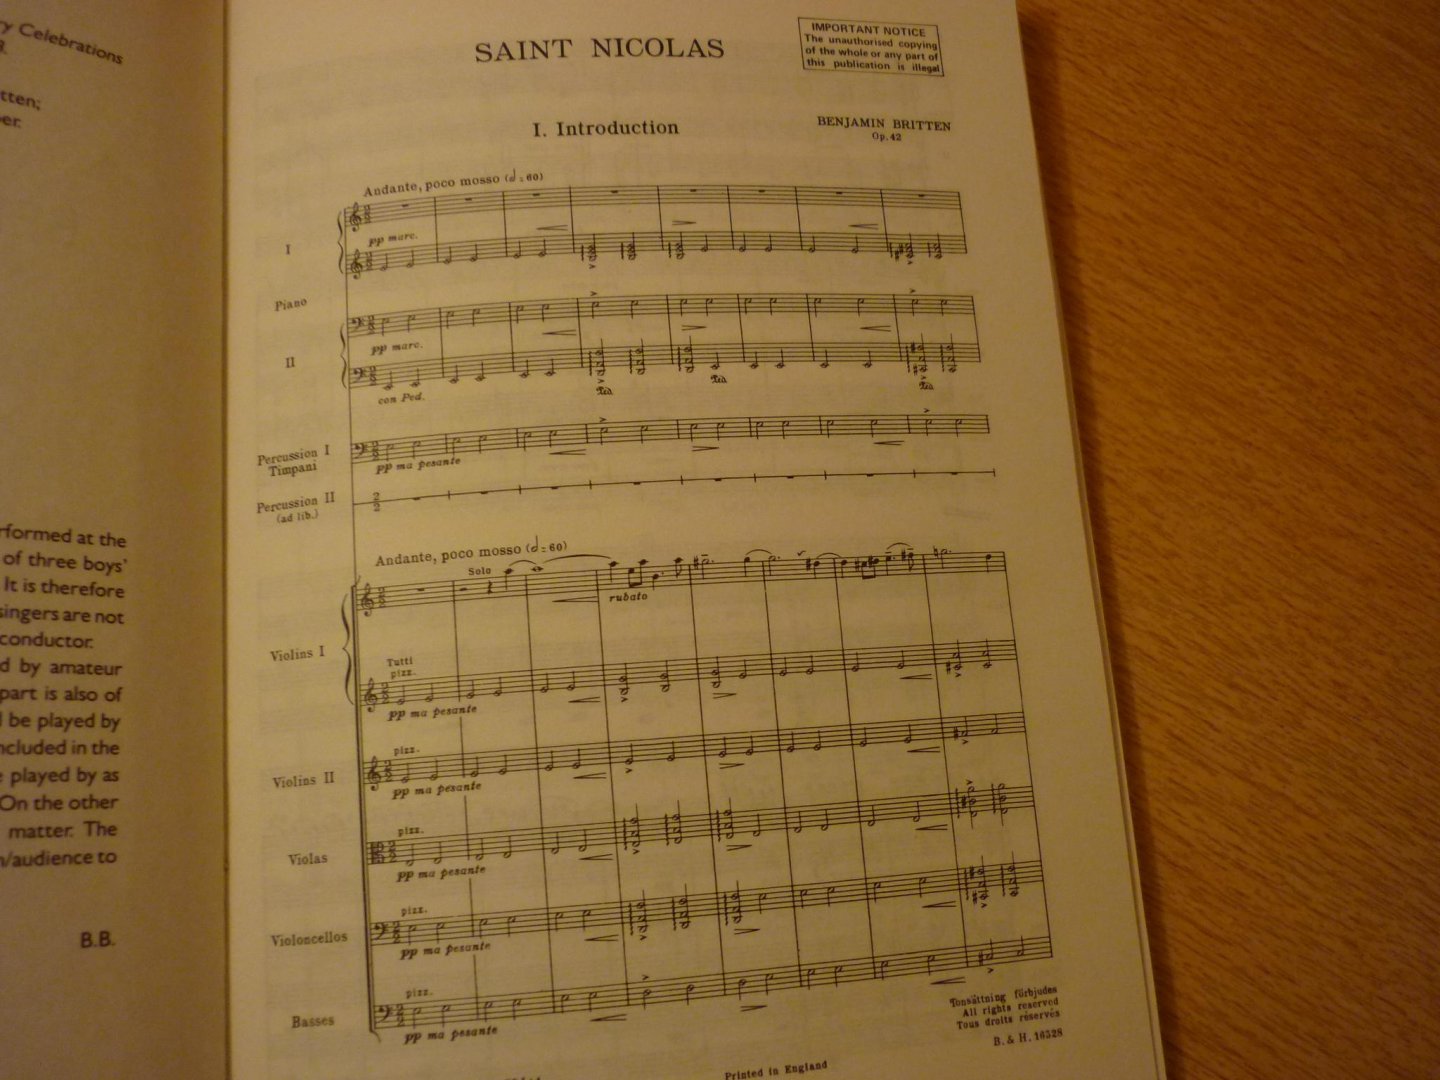 Britten; Benjamin (1913 - 1976) - Saint Nicolas; Opus 42; A cantate for Solo, mixed chorus, piano, duet, strings, percussion and organ